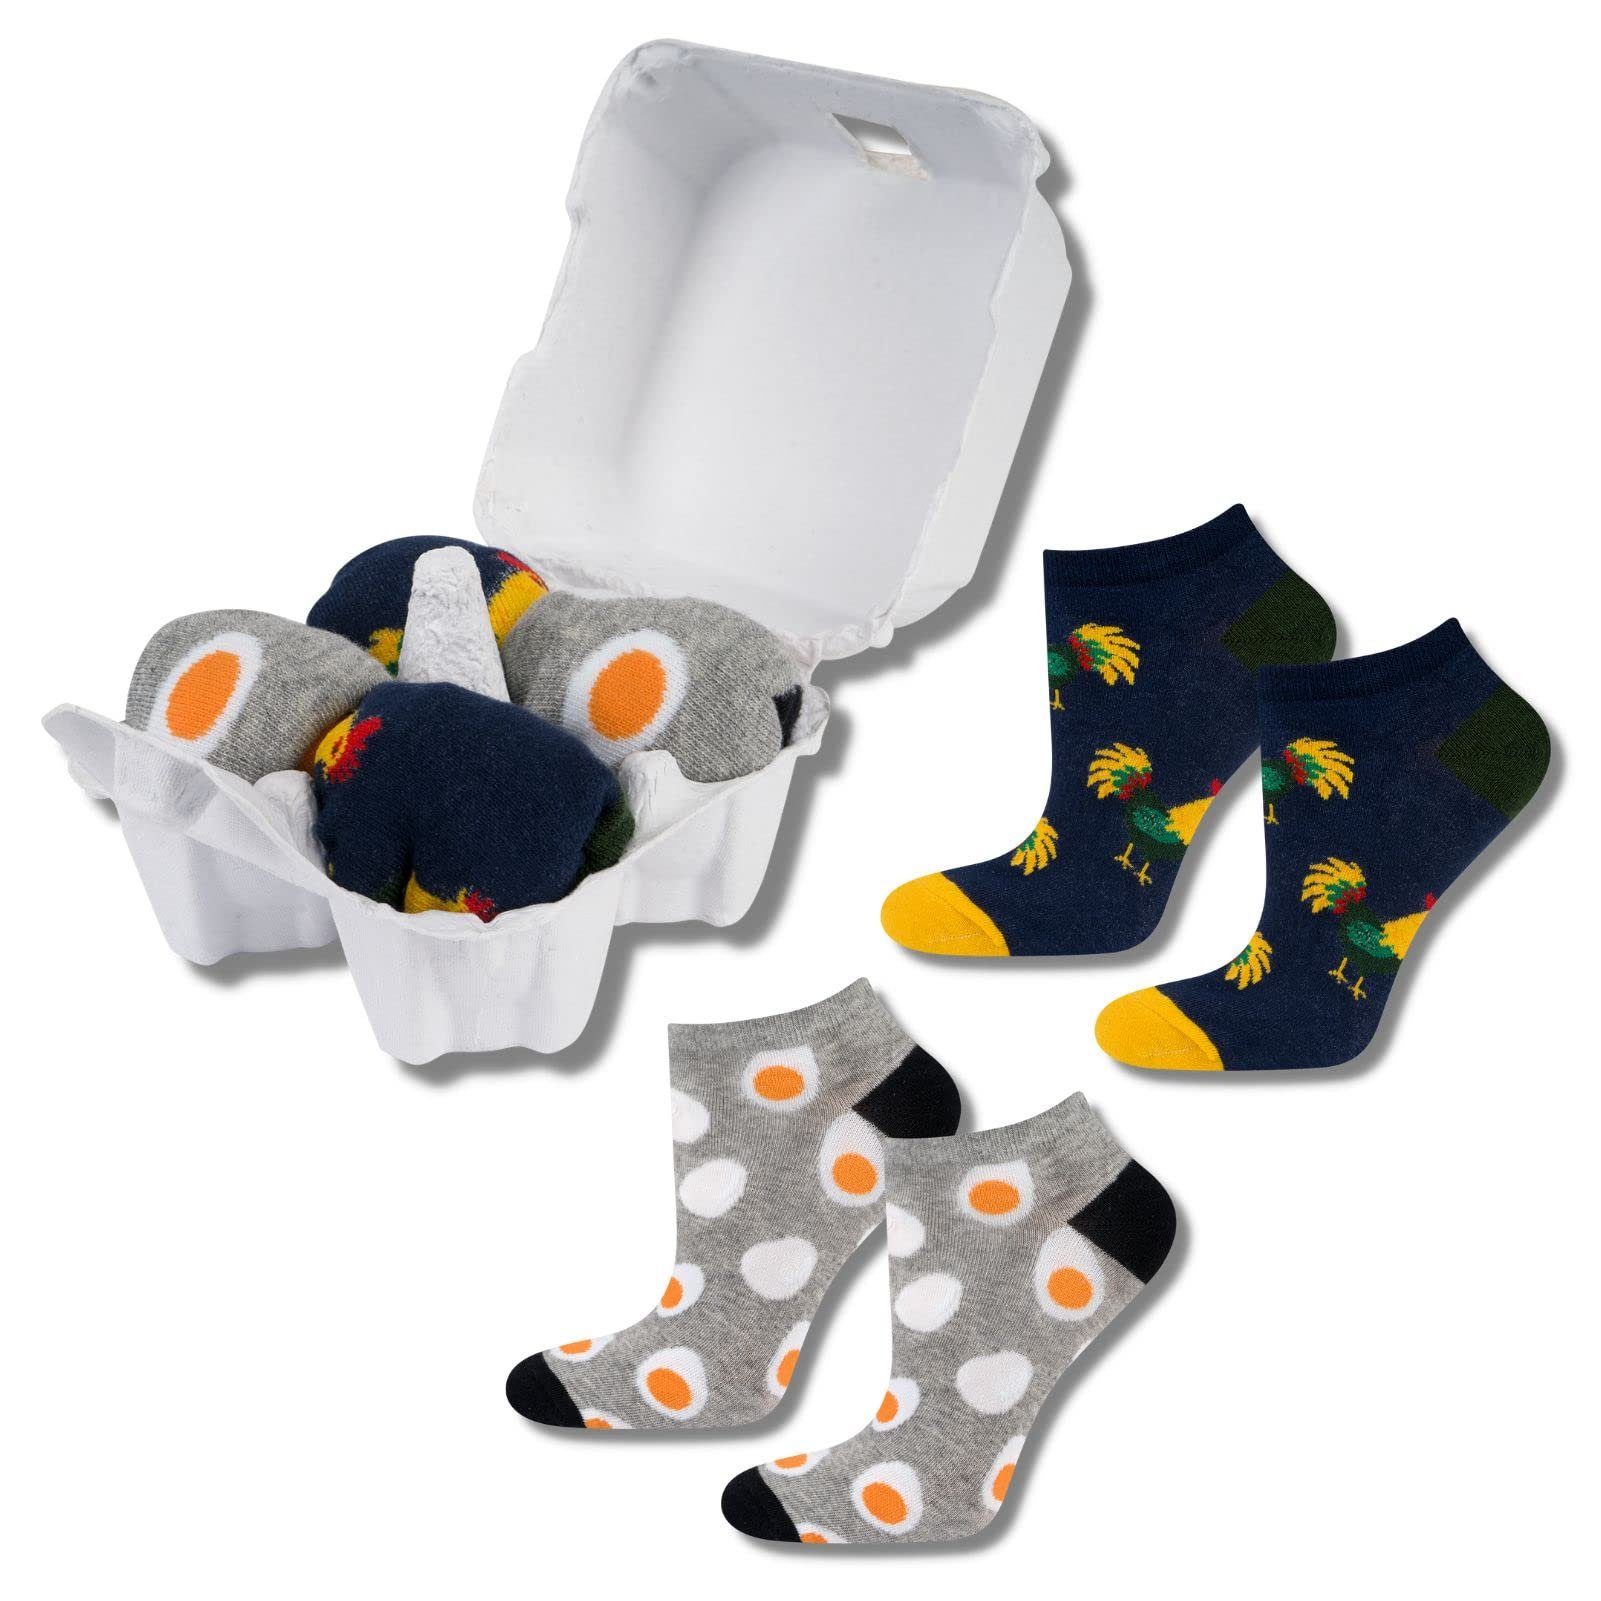 Soxo Socken Ostern Geschenke Für Männer (Box, 2-Paar, Set) Damen Socken Bunt 2 Größen Grau / Blau